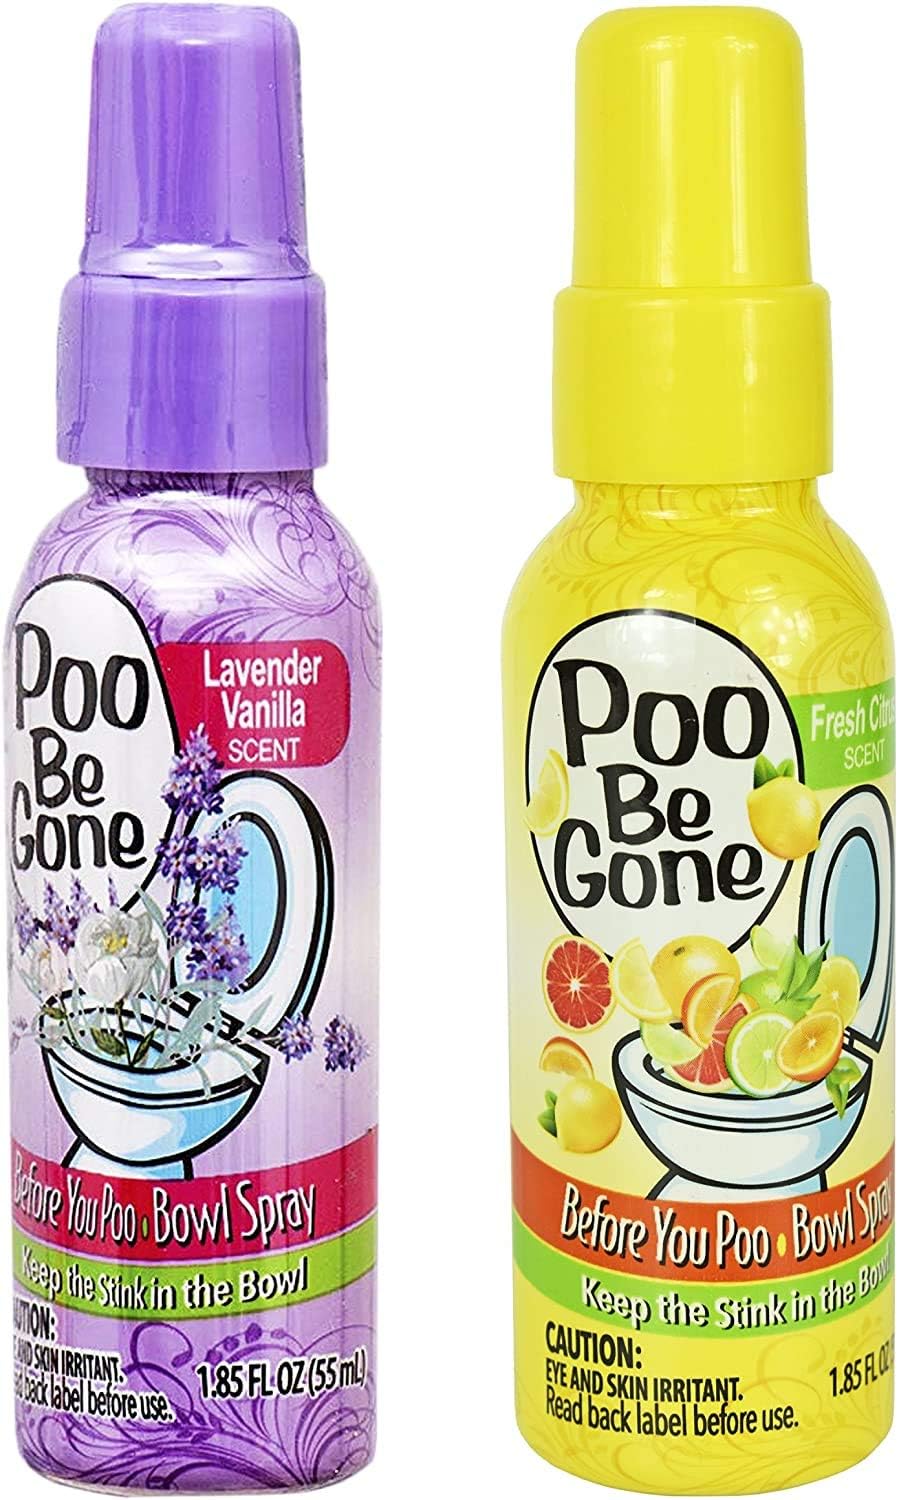 Poo Be Gone Toilet Spray 1.85oz - Before You Go Toilet [...]